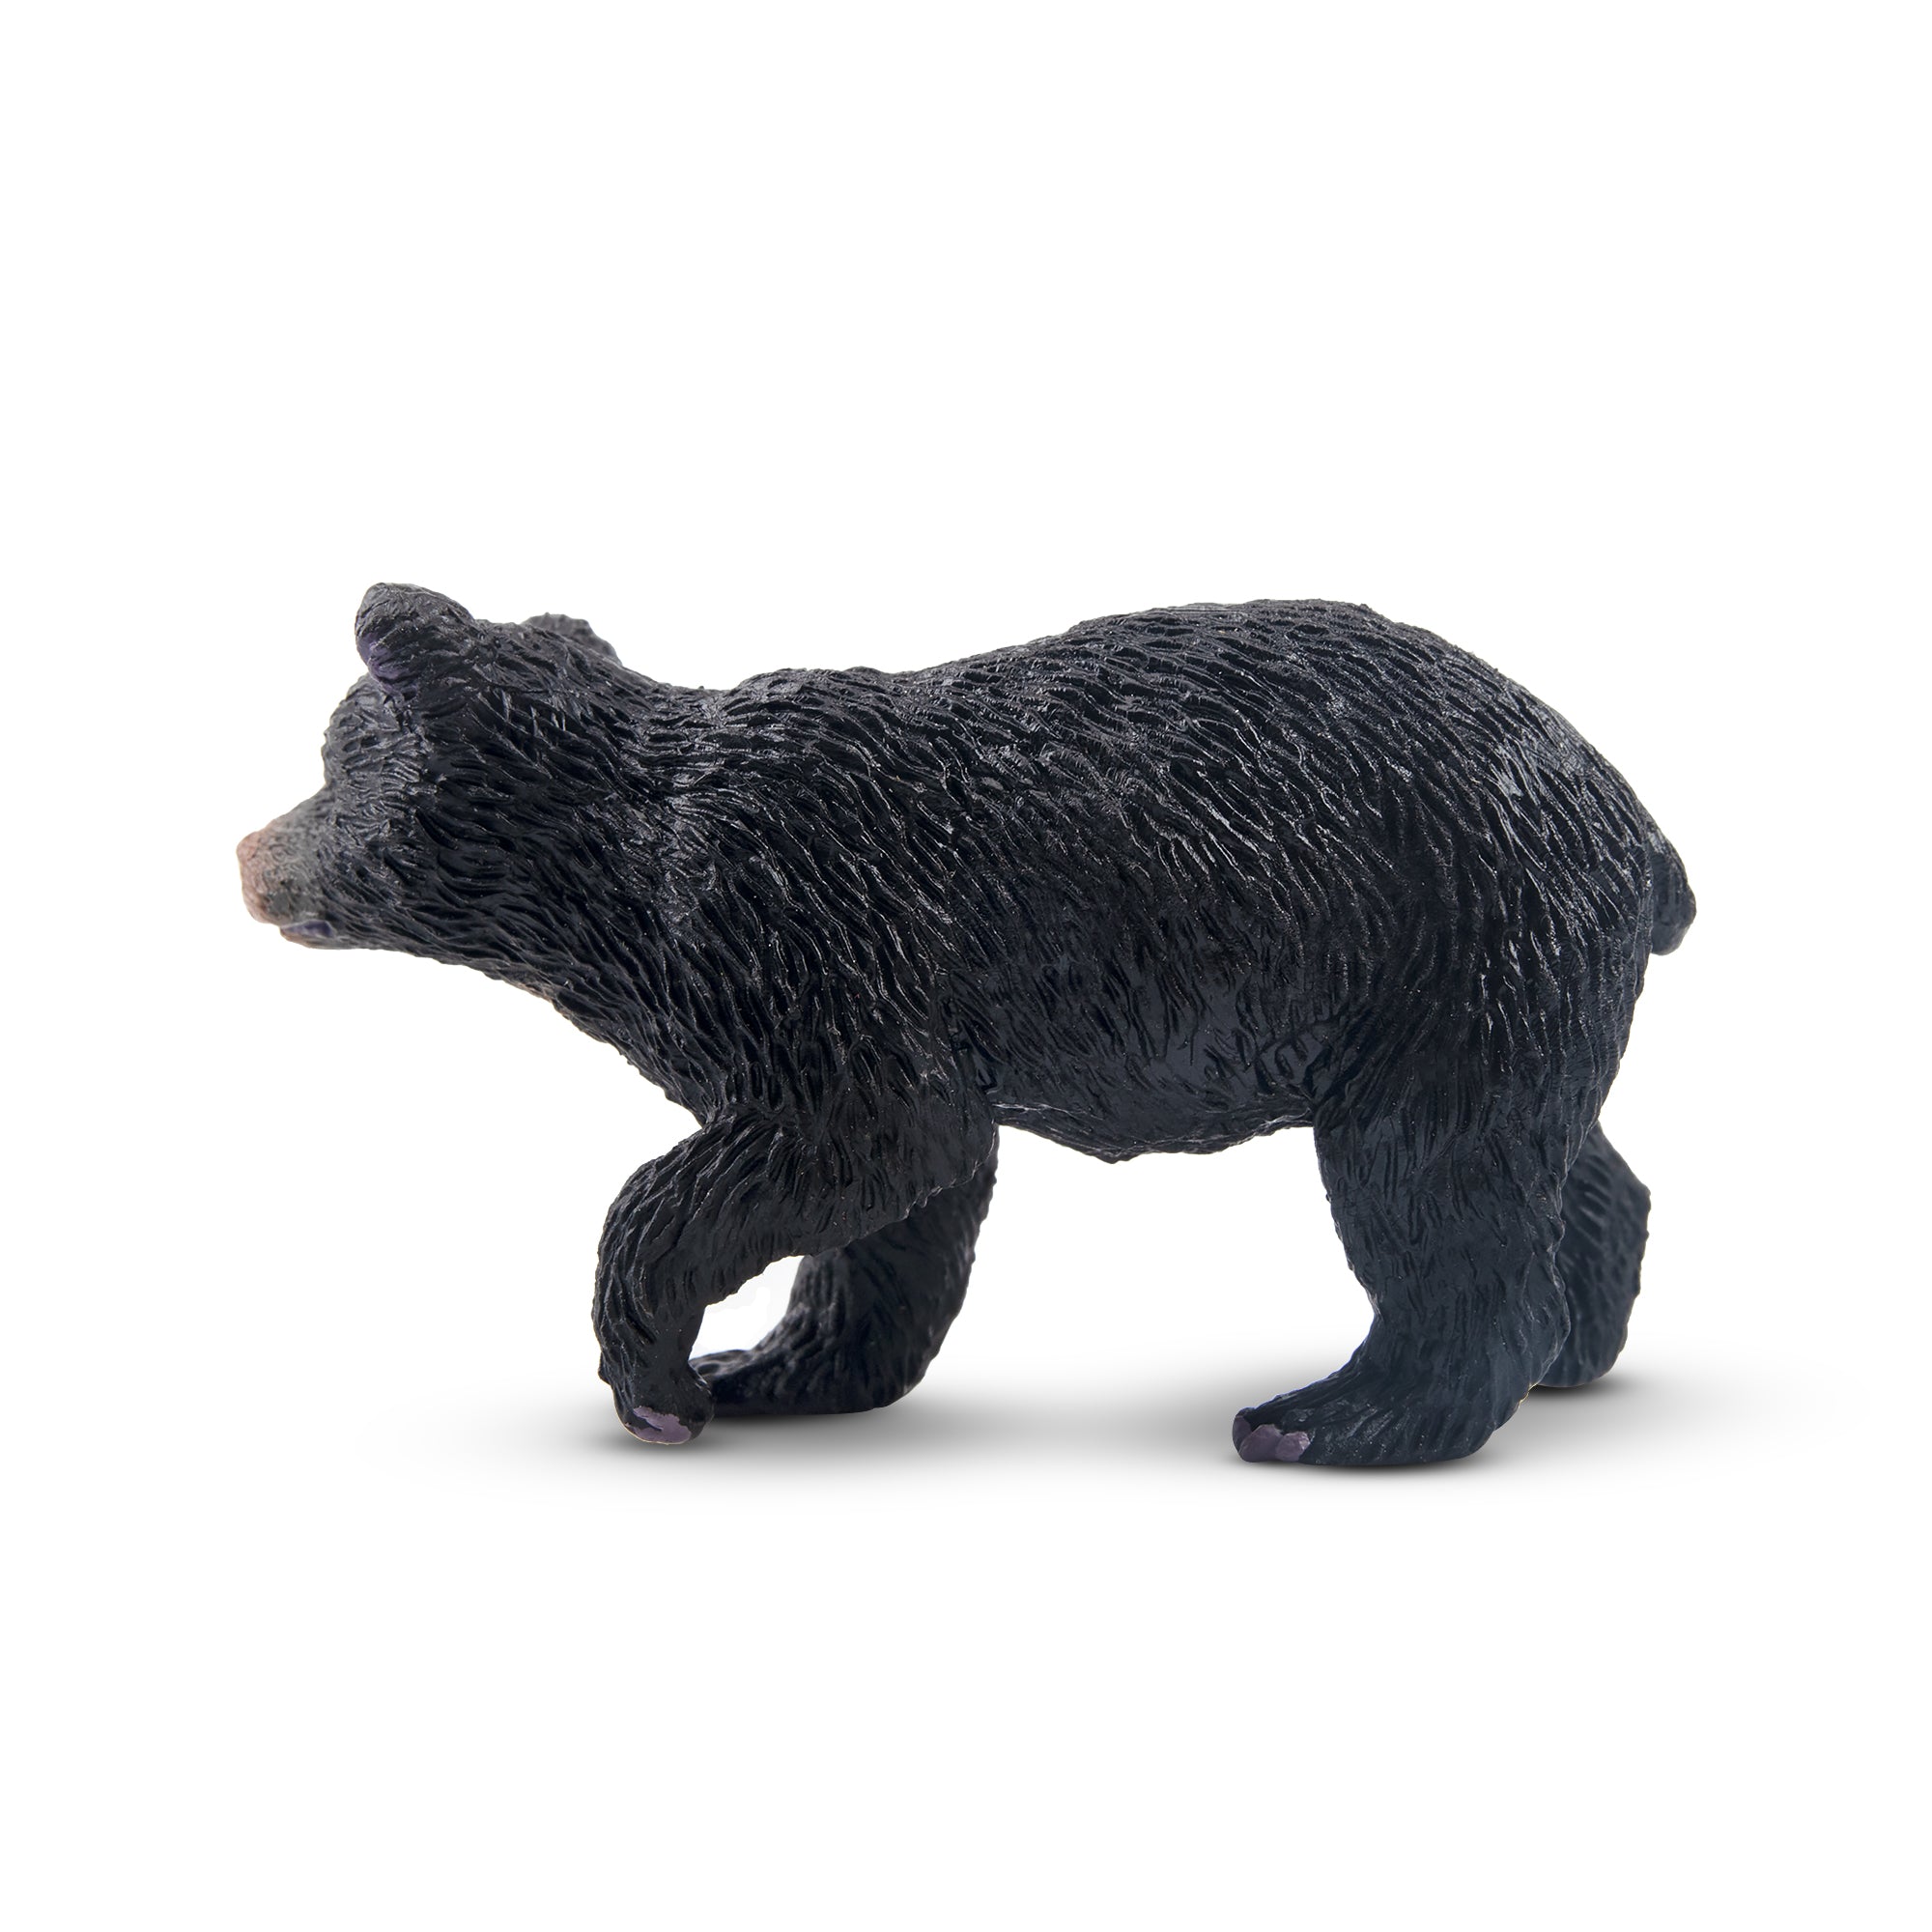 Toymany Black Bear Cub with Raised Paws Figurine Toy-3